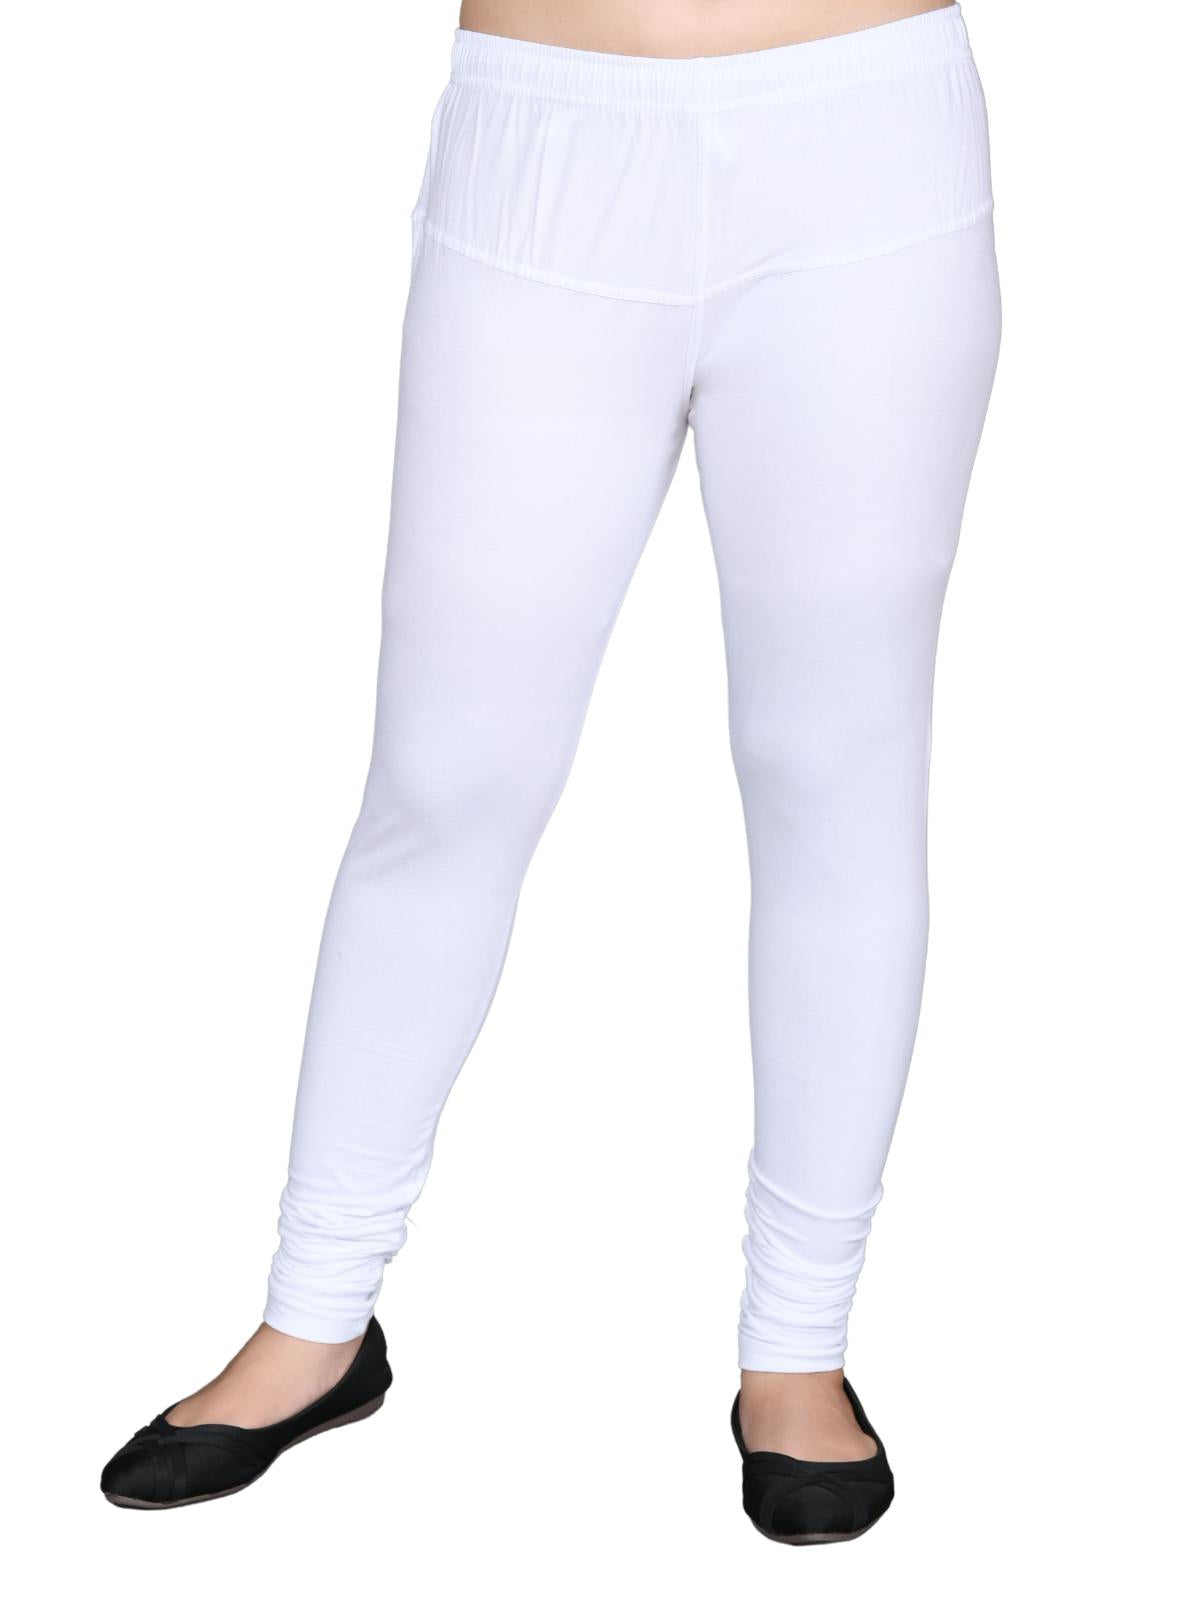 Buy Morrio White Cotton Lycra Churidar Legging,2XL for Women at